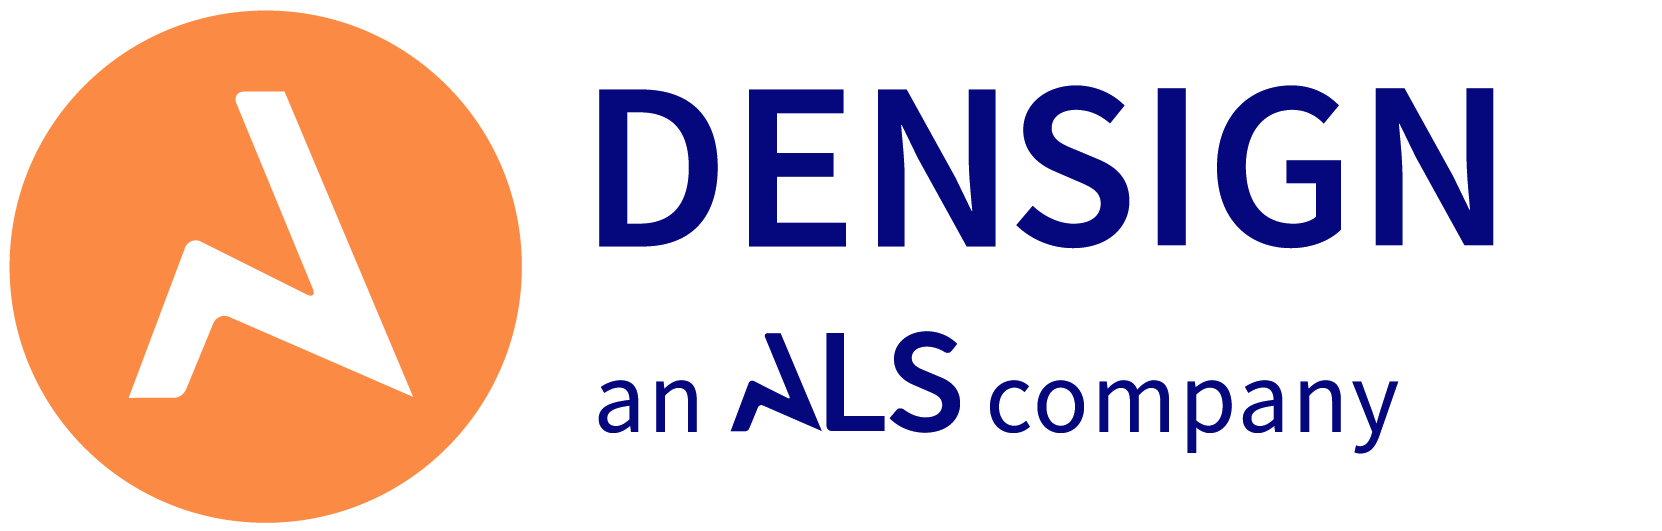 ALS Densign Lab